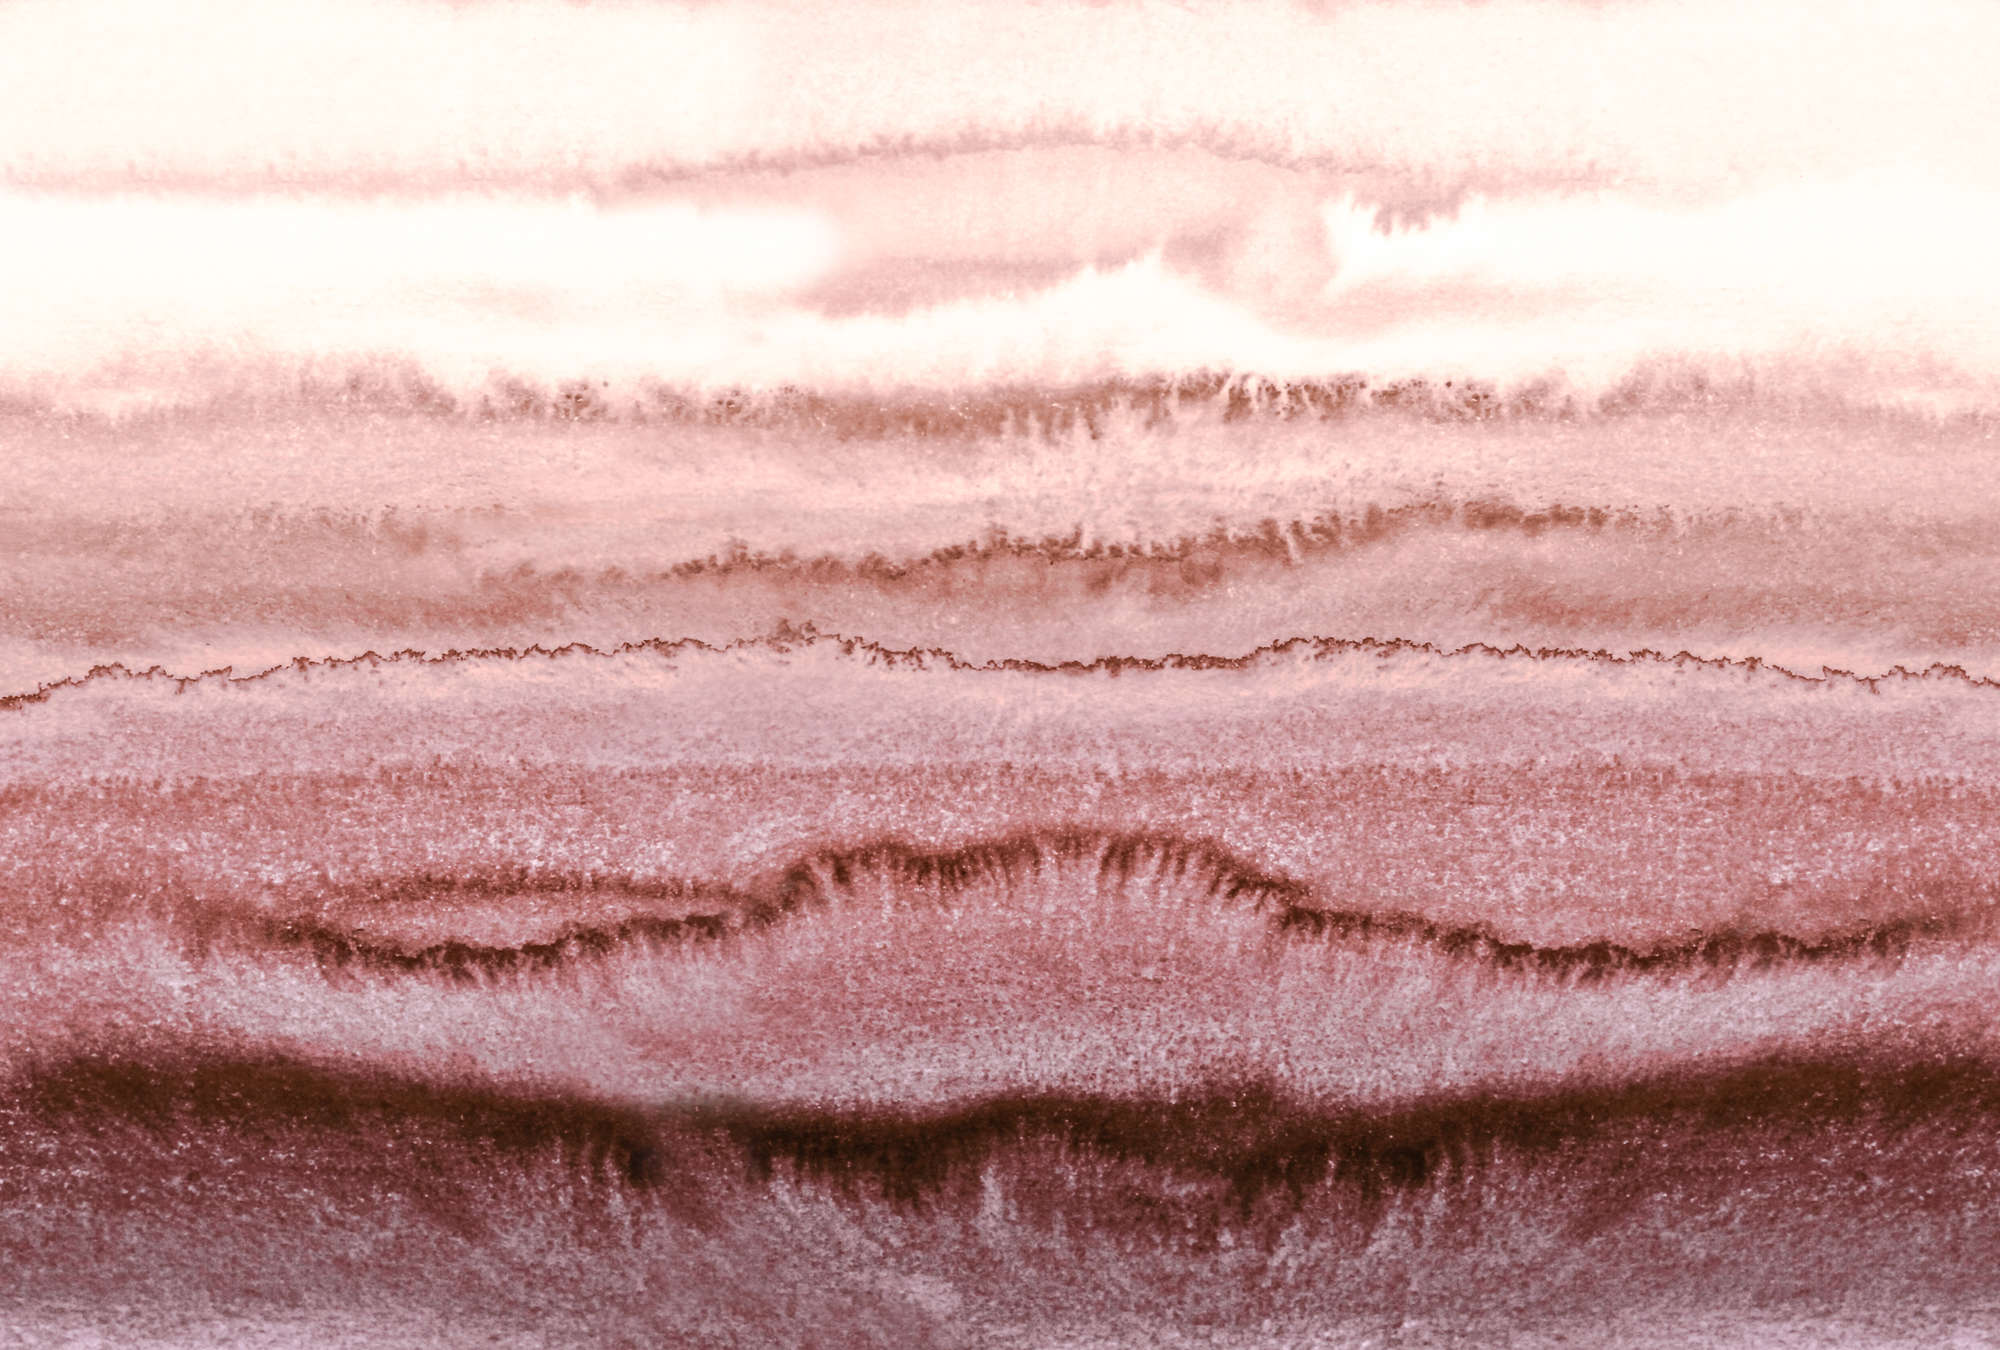             Aquarel behang abstract met verloop in rosé
        